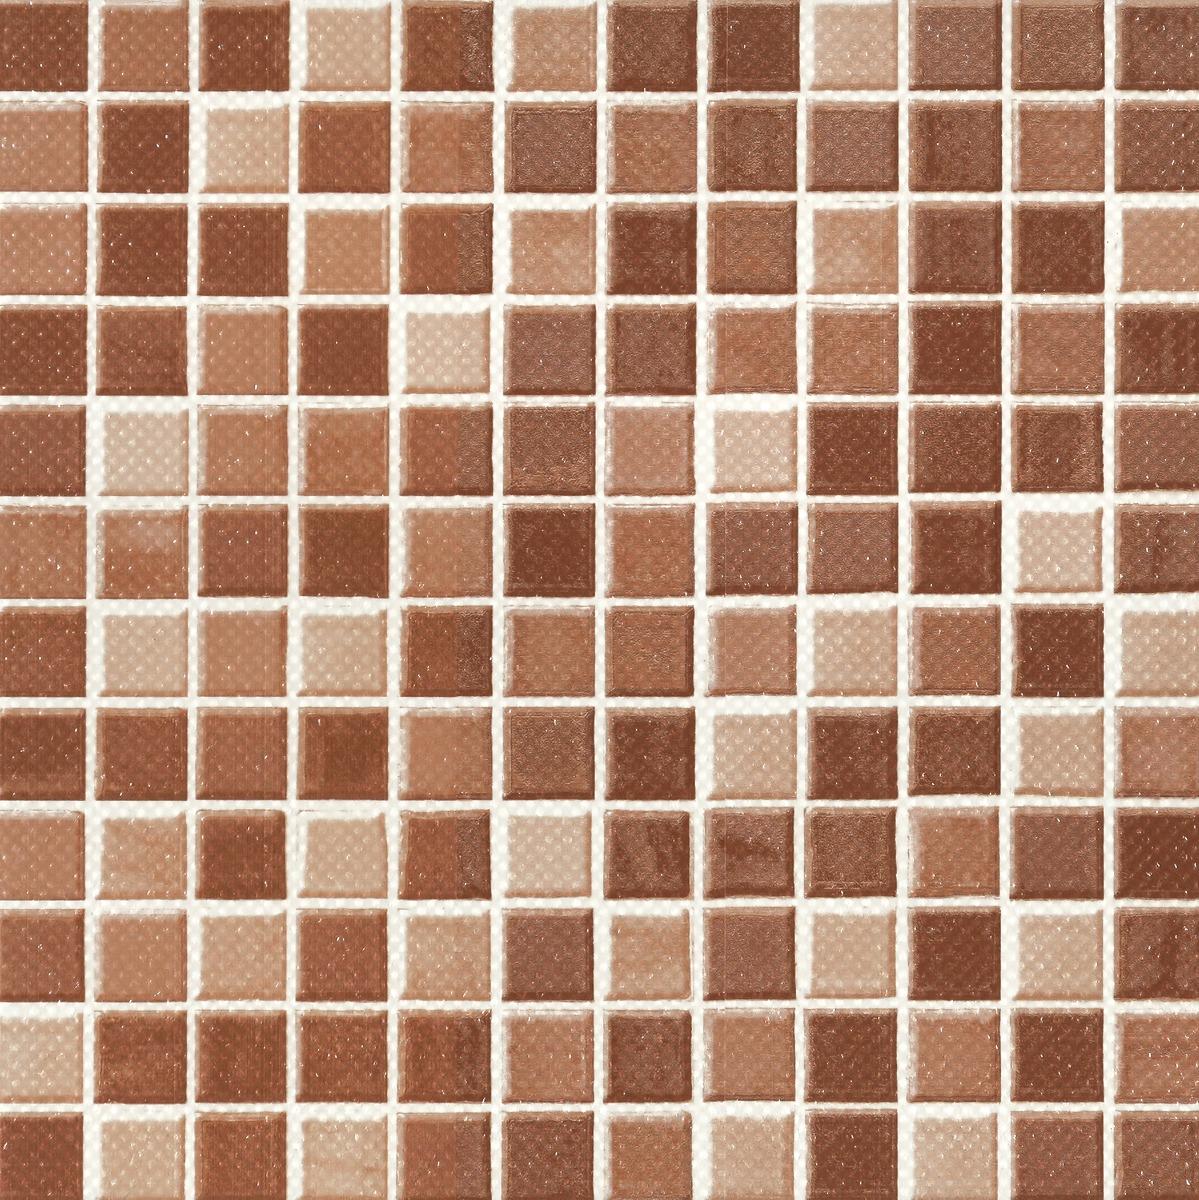 Brown Tiles for Bathroom Tiles, Balcony Tiles, Hospital Tiles, Bar/Restaurant, Commercial/Office, Outdoor/Terrace